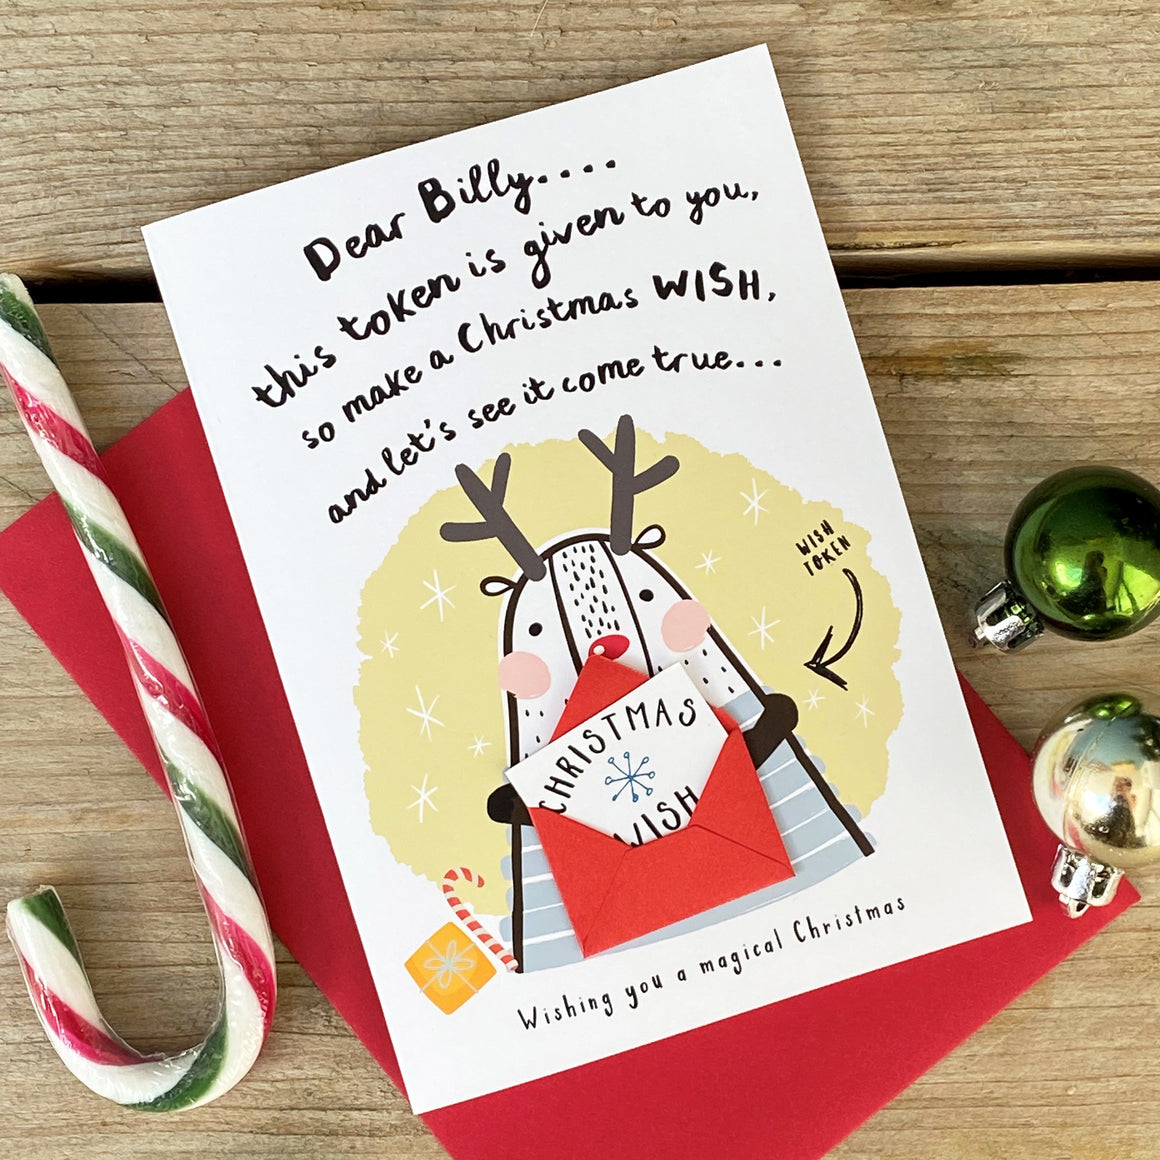 Sending a Christmas Wish token Greeting Card for kids